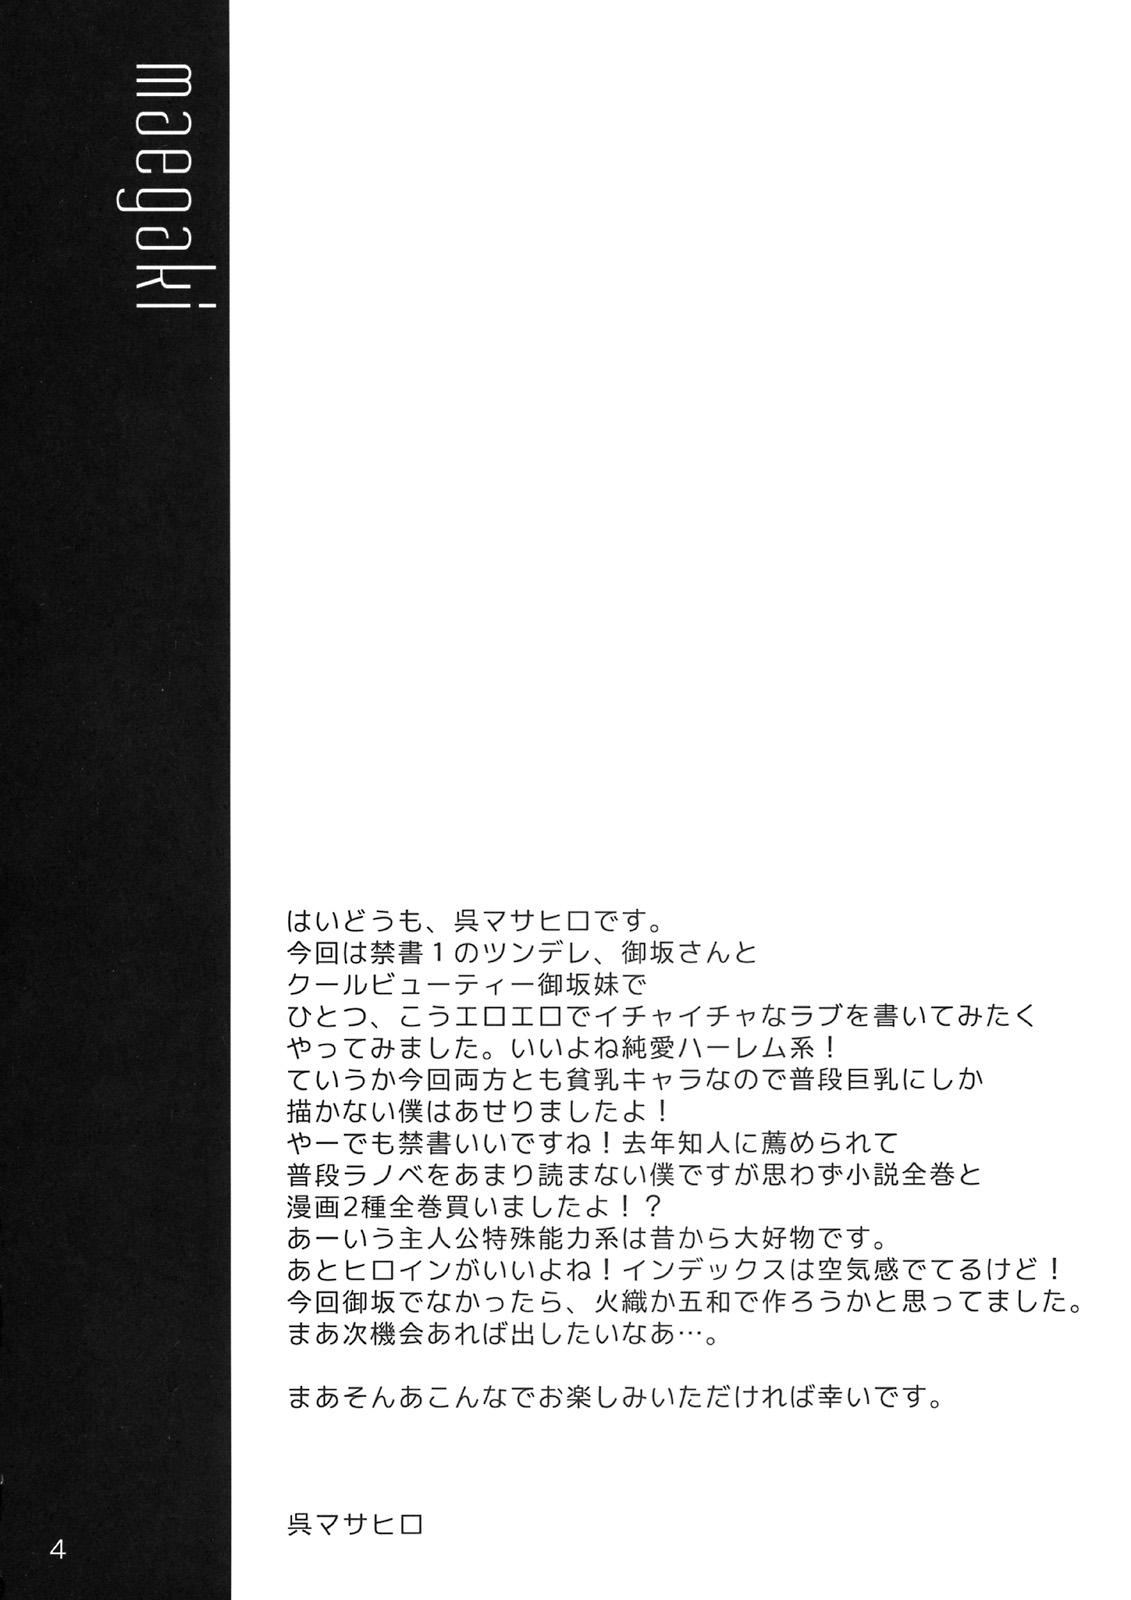 Butts CL-ic #4 - Toaru majutsu no index Lezdom - Page 3